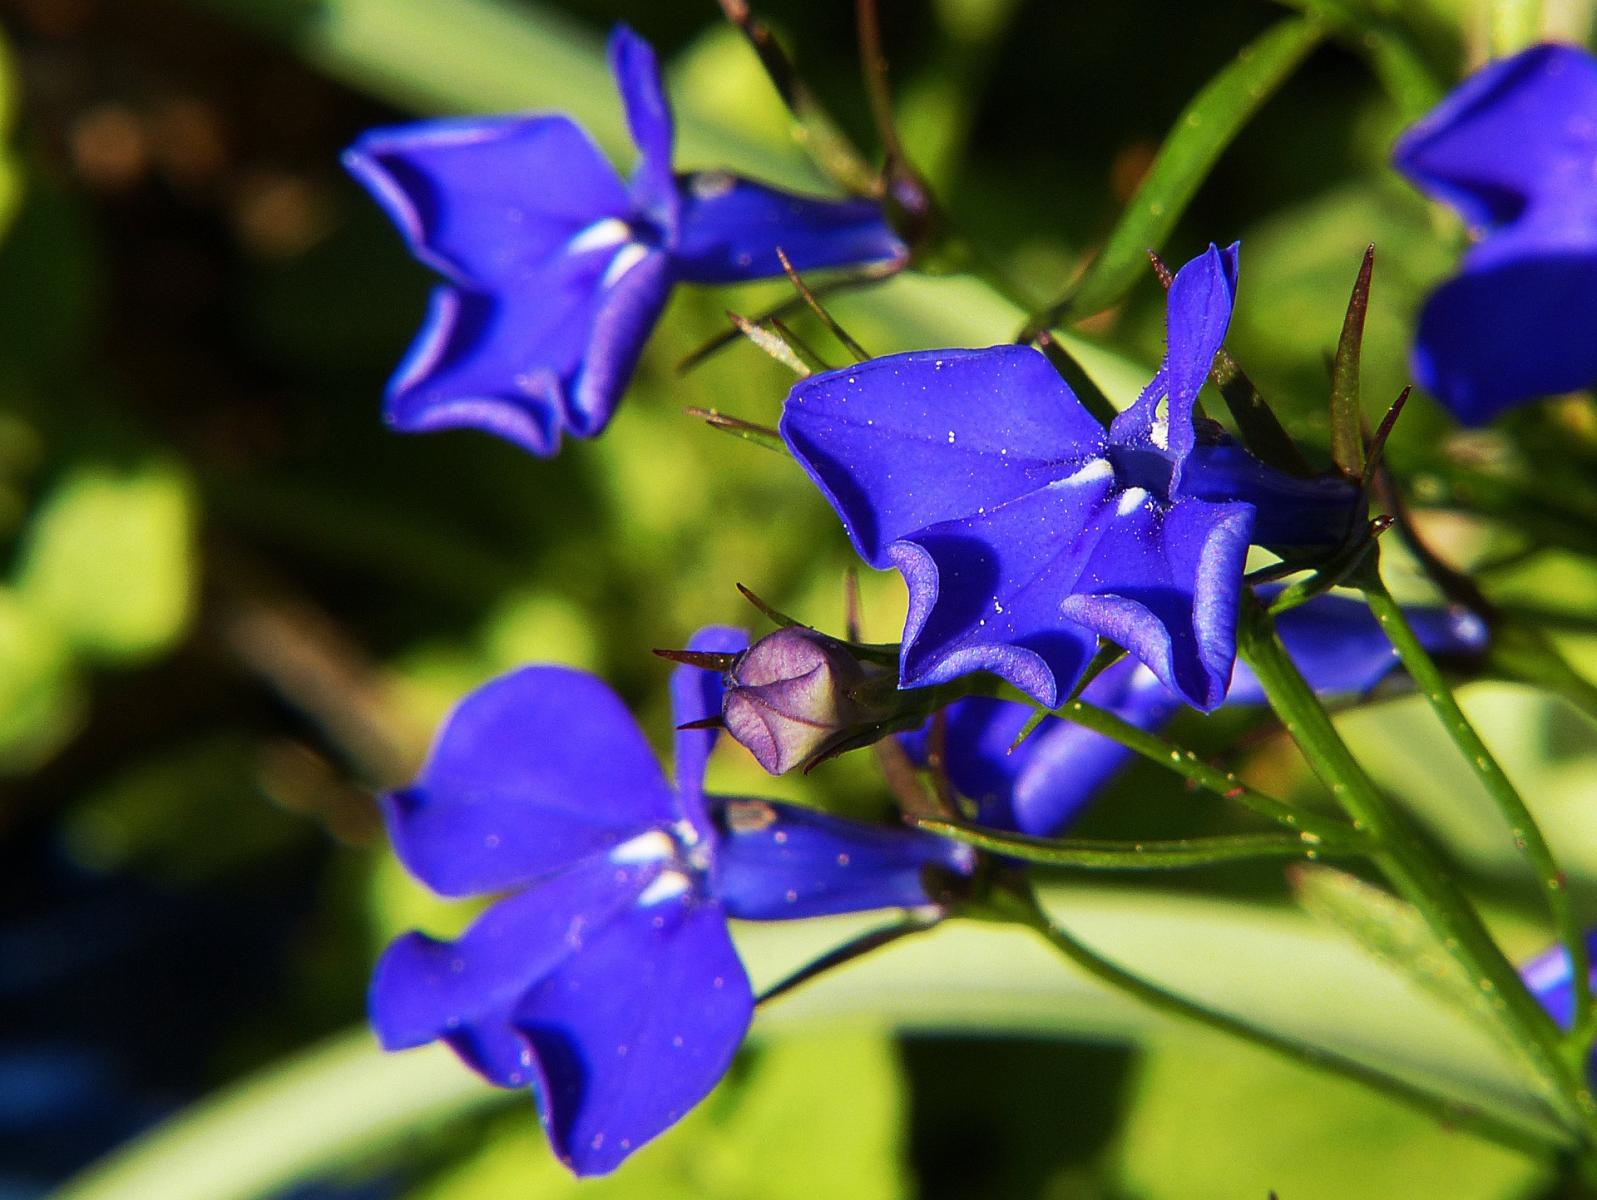 Picture of the Dark blue Lobelia larkspur flower.